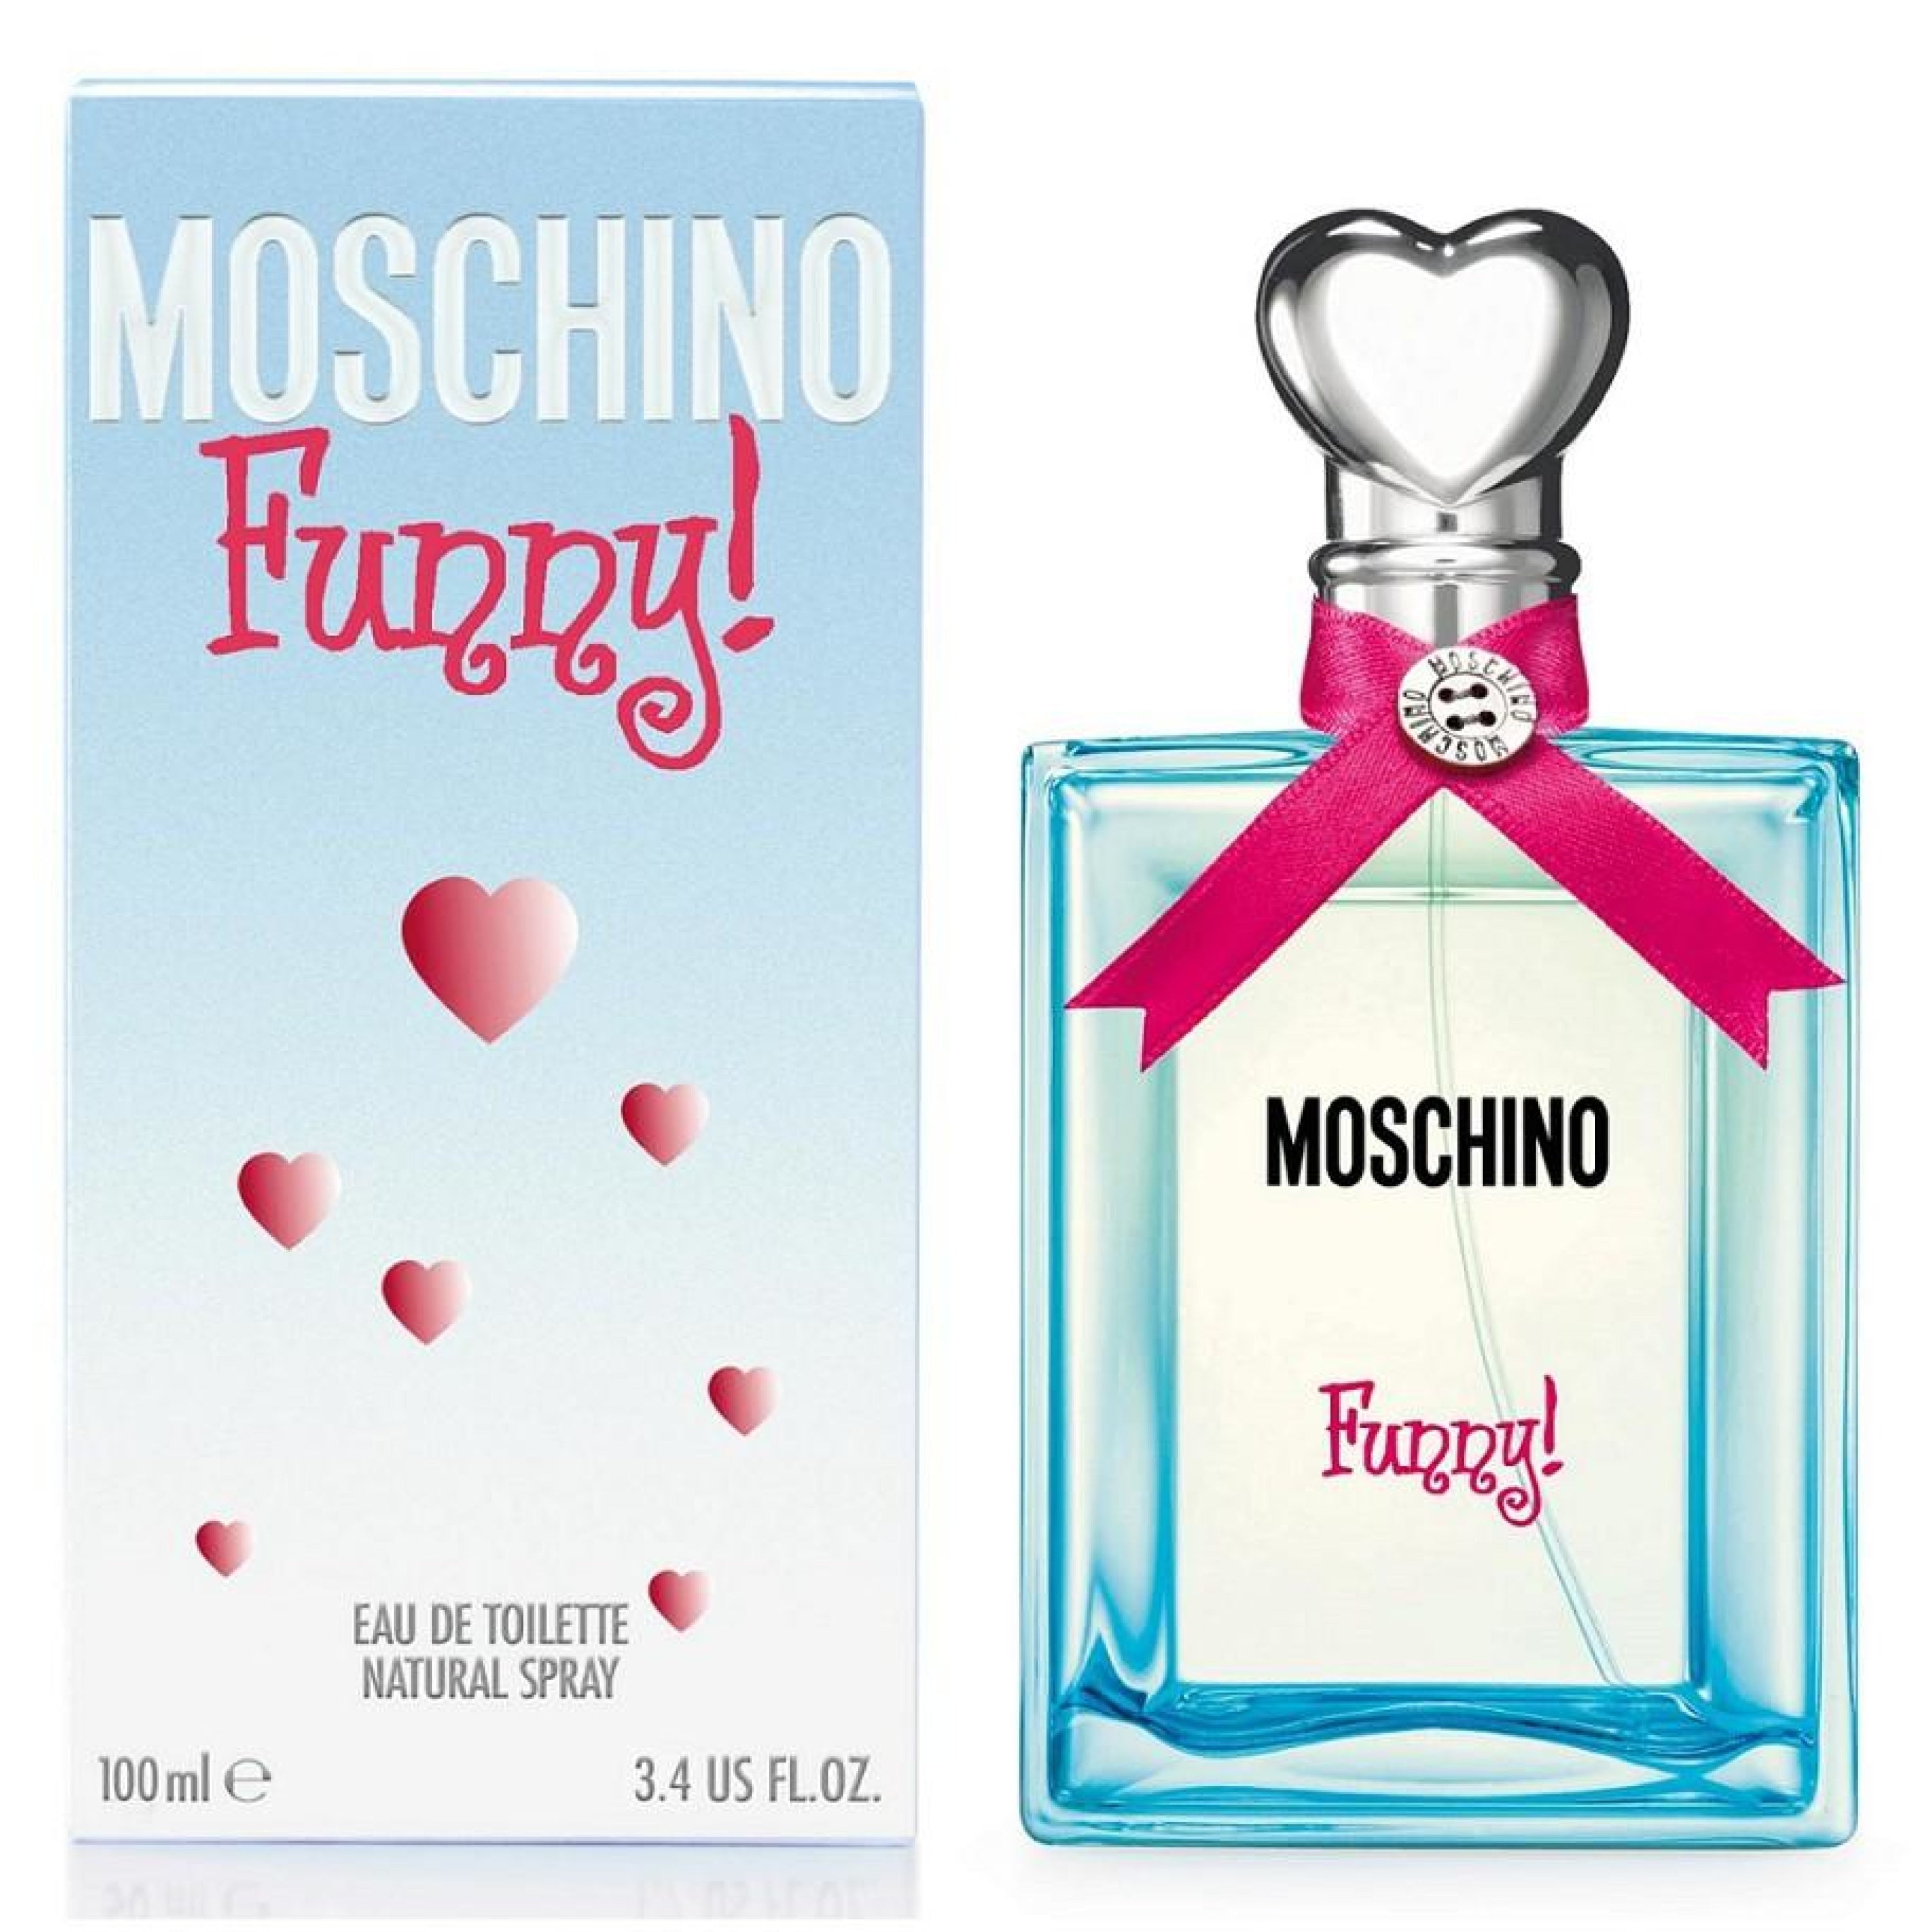 Духи москино отзывы. Moschino funny Moschino 100 мл. Moschino funny! EDT, 100 ml. Moschino funny! EDT 100ml (l). Moschino funny w EDT 50 ml.